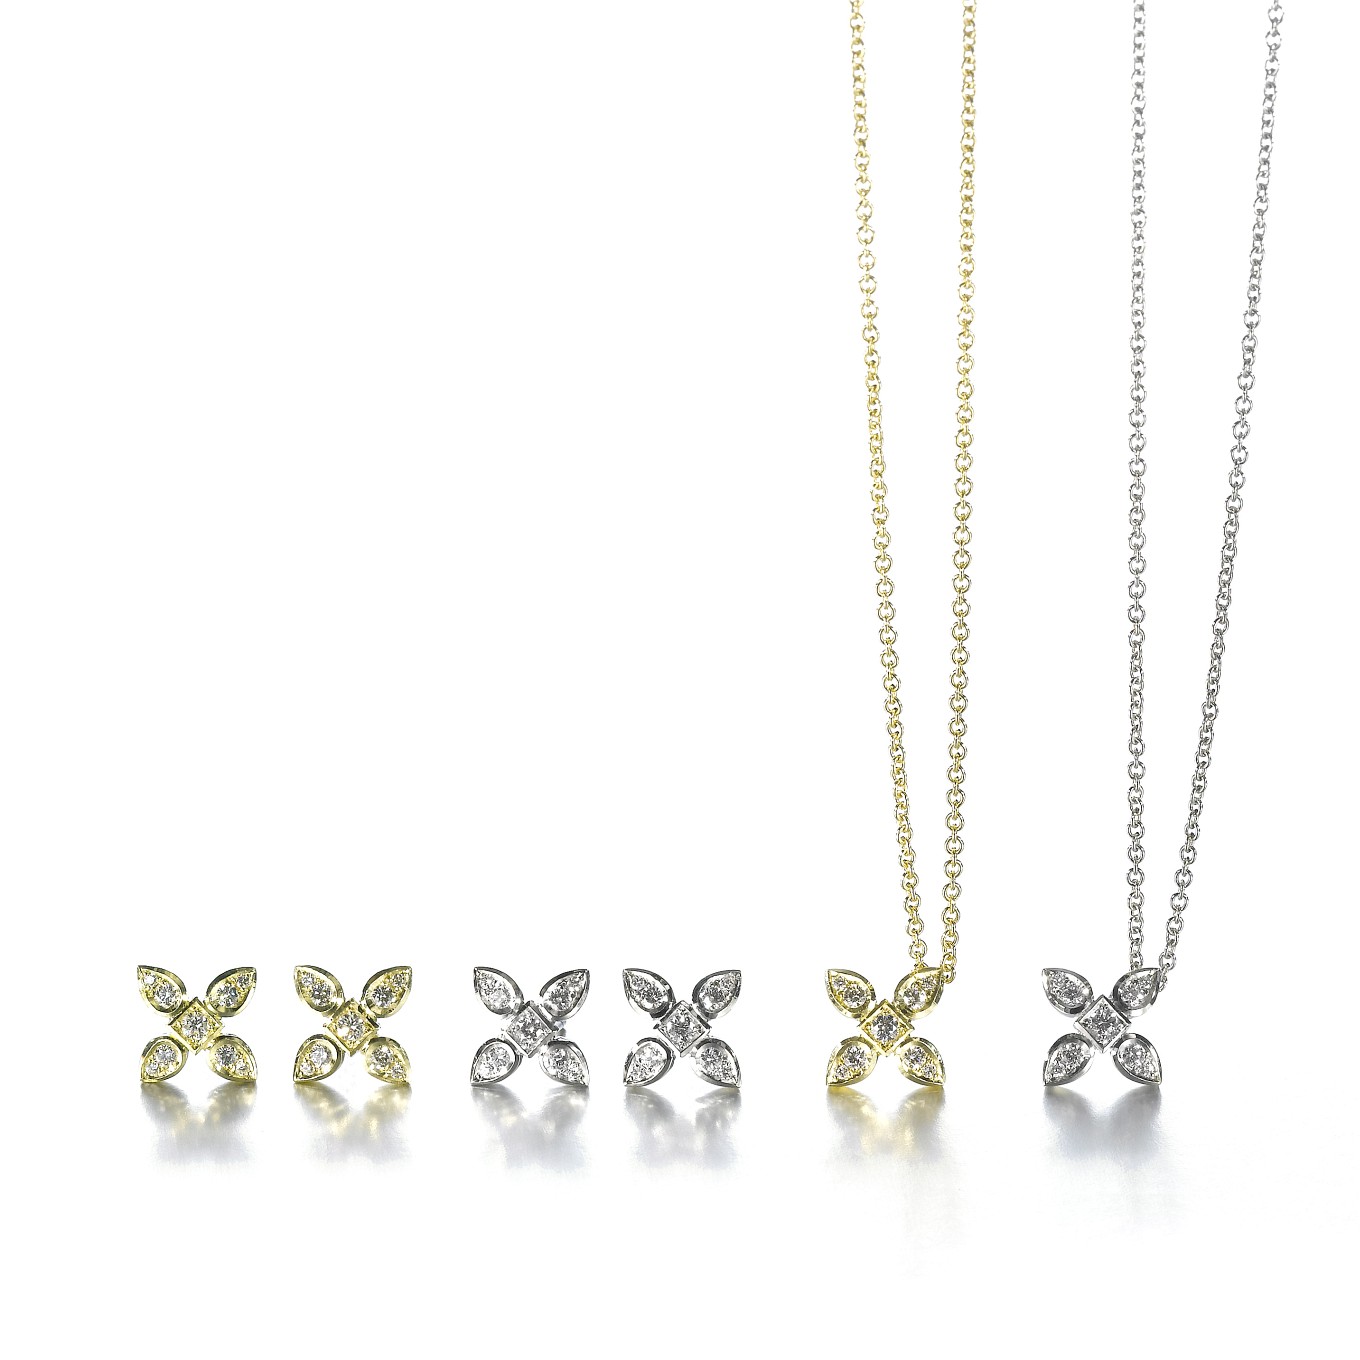 Sevilla diamond earrings & pendants in 18k white & yellow gold